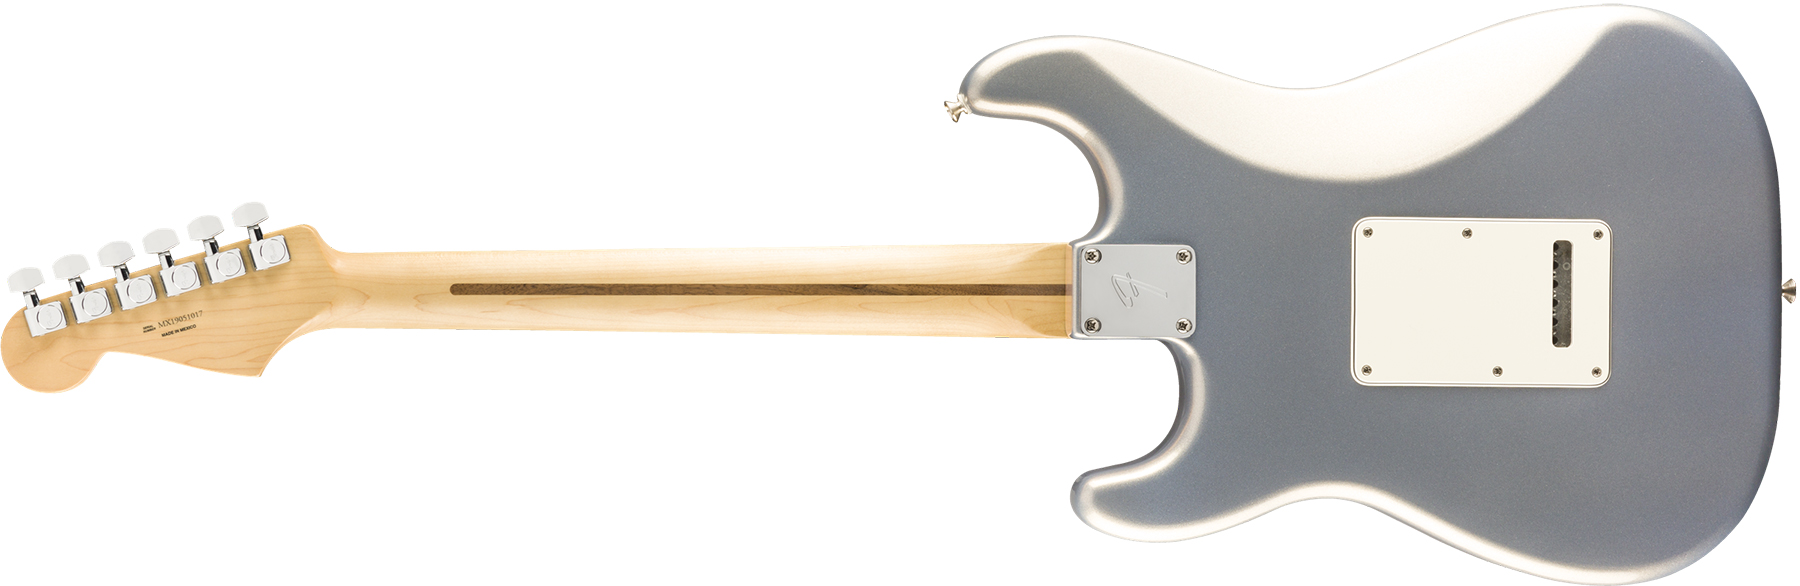 Fender Strat Player Mex 3s Trem Pf - Silver - Str shape electric guitar - Variation 1